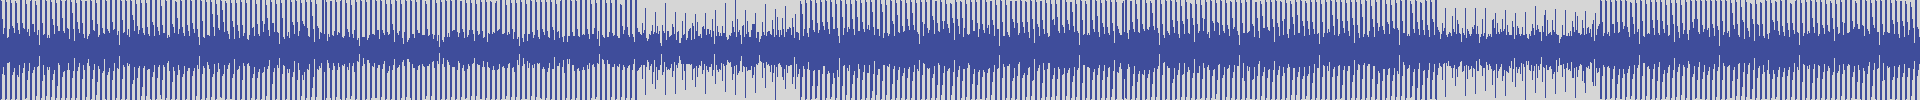 atomic_recordings [AR006] Pluton 99 - Electricity [Vanguard Mix] audio wave form